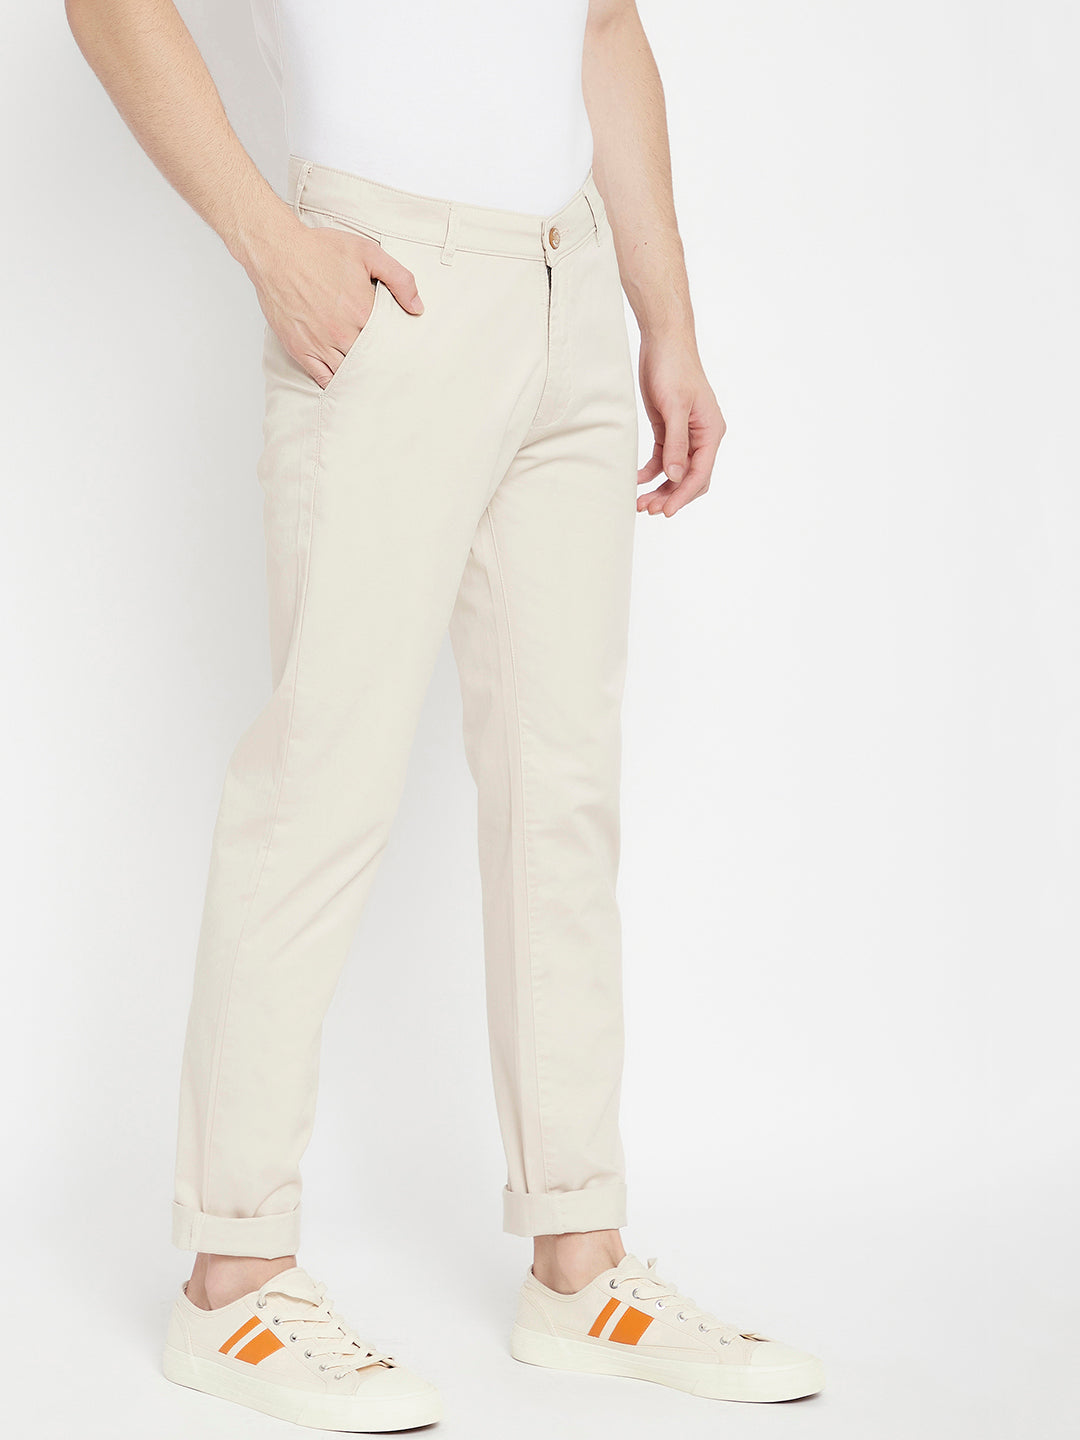 Cream Slim Fit Trousers - Men Trousers